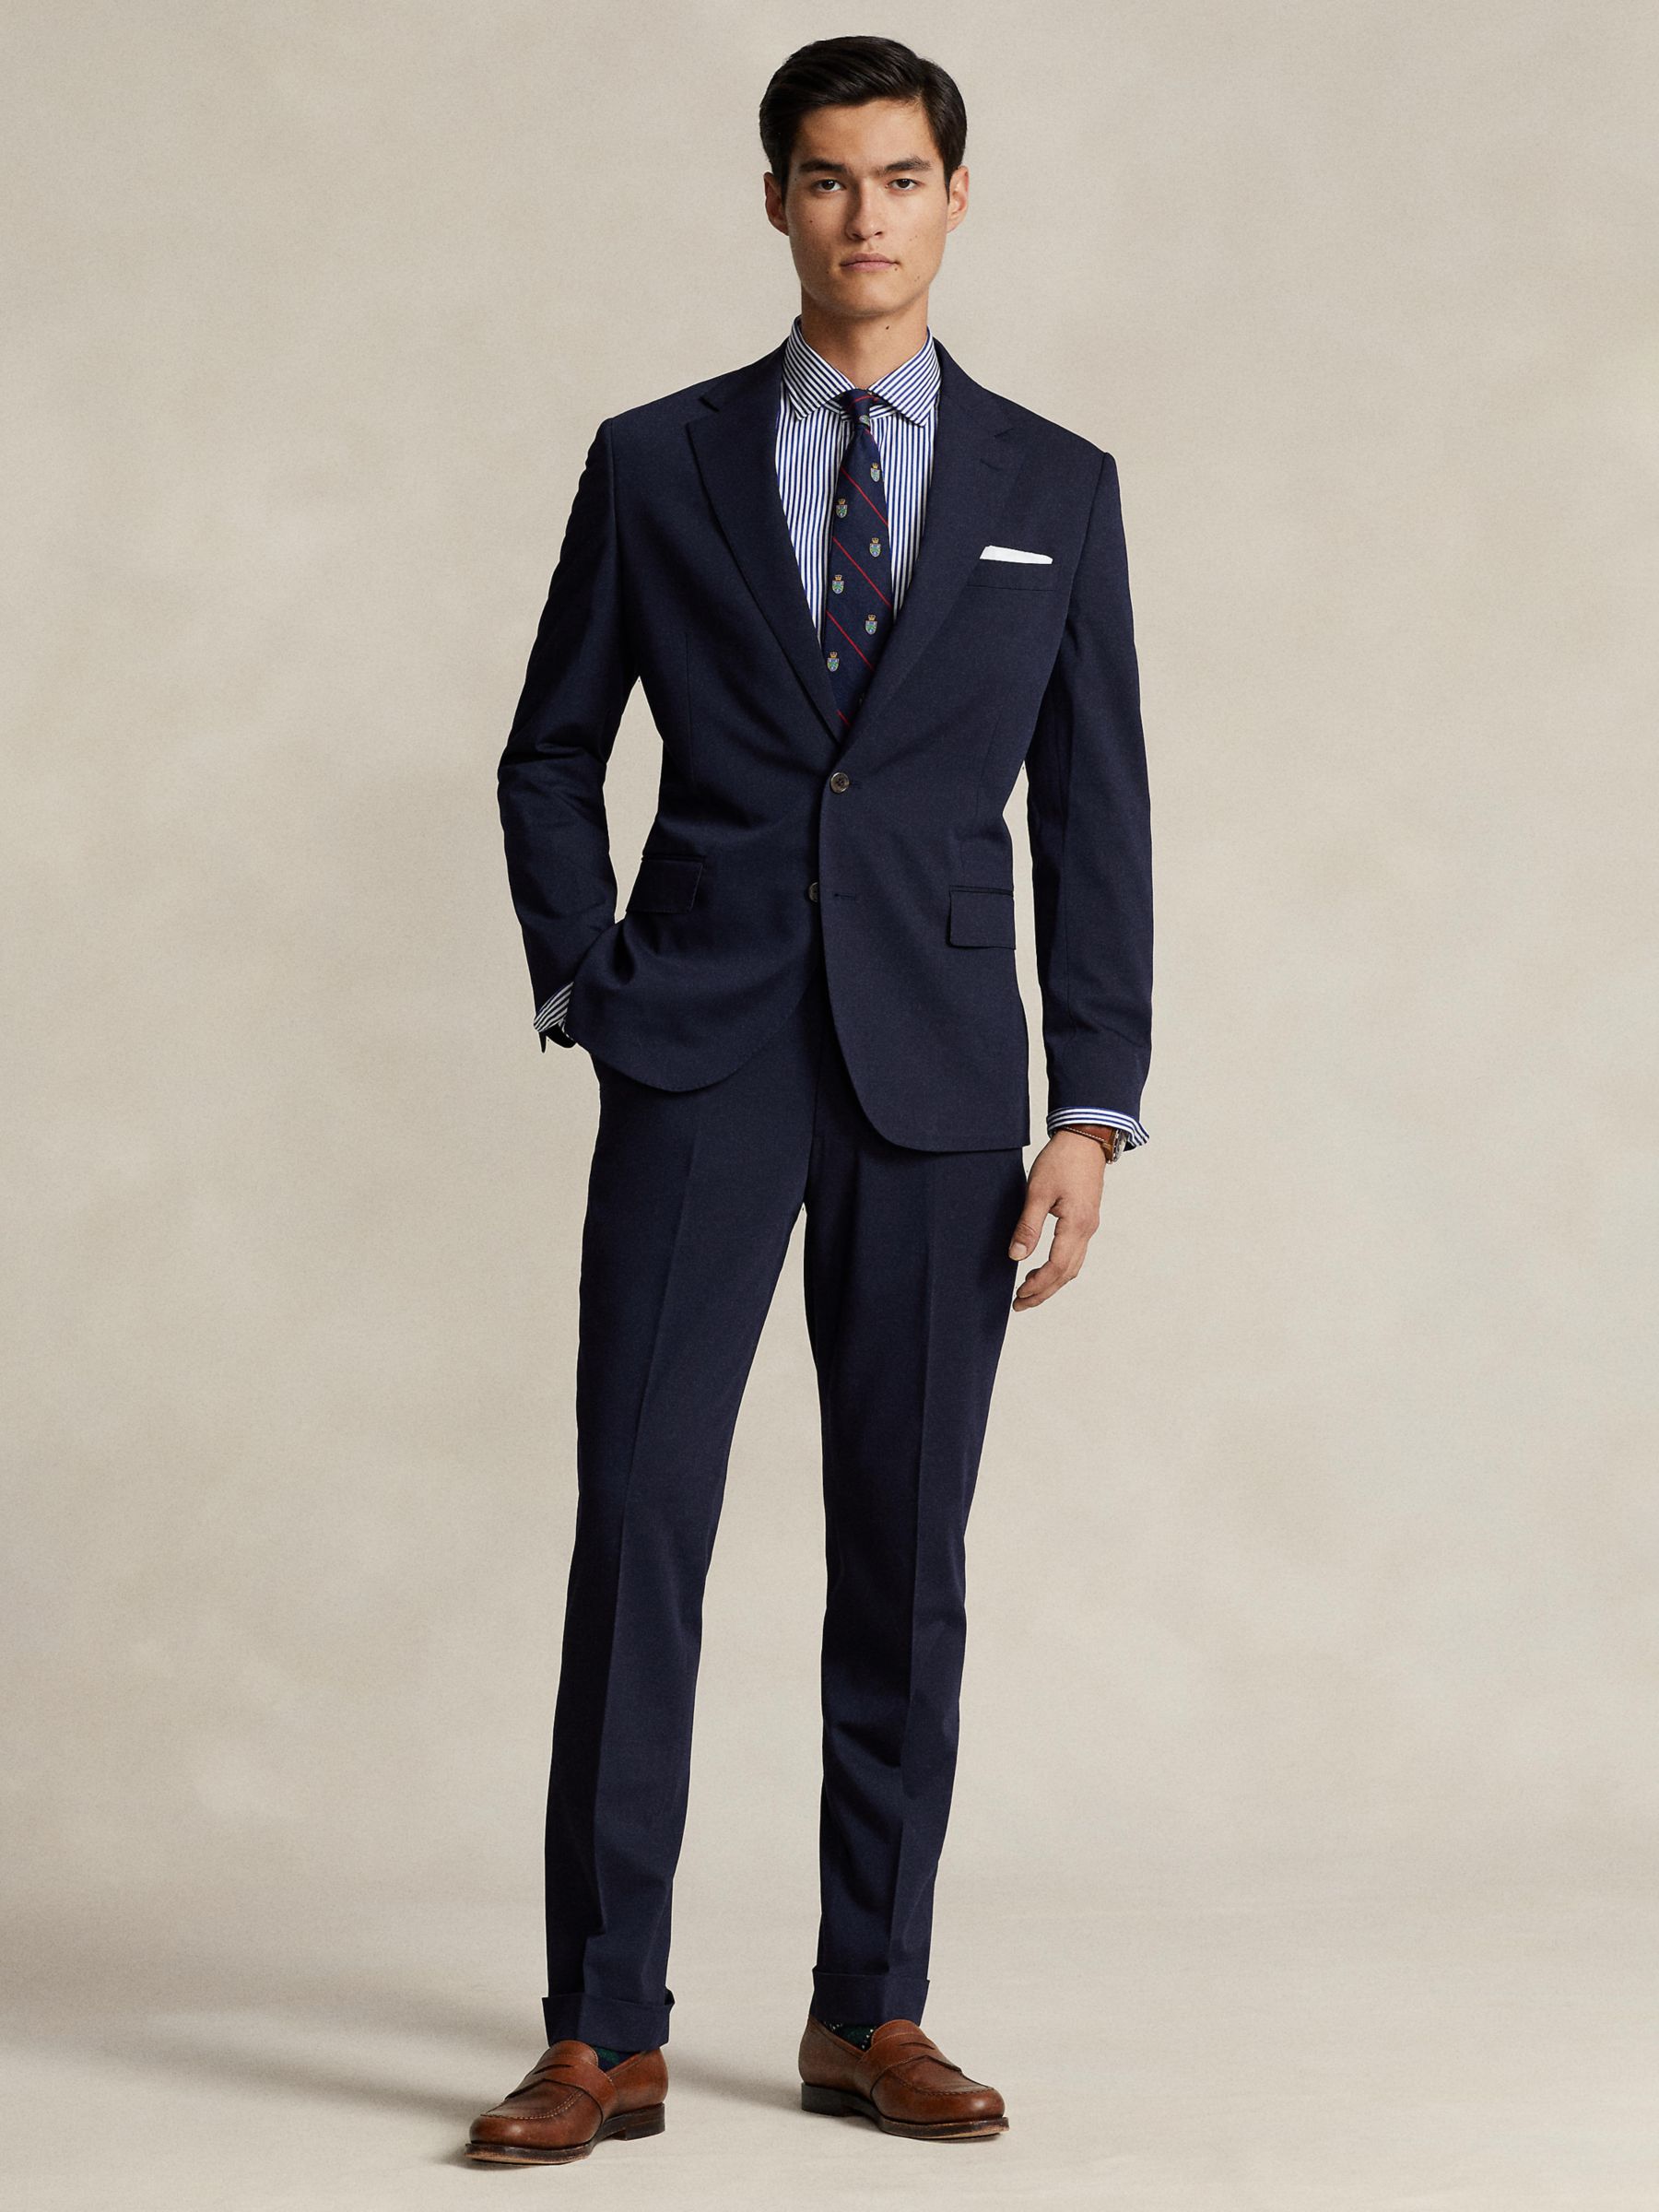 Buy Polo Ralph Lauren Tailored Fit Suit Jacket Online at johnlewis.com